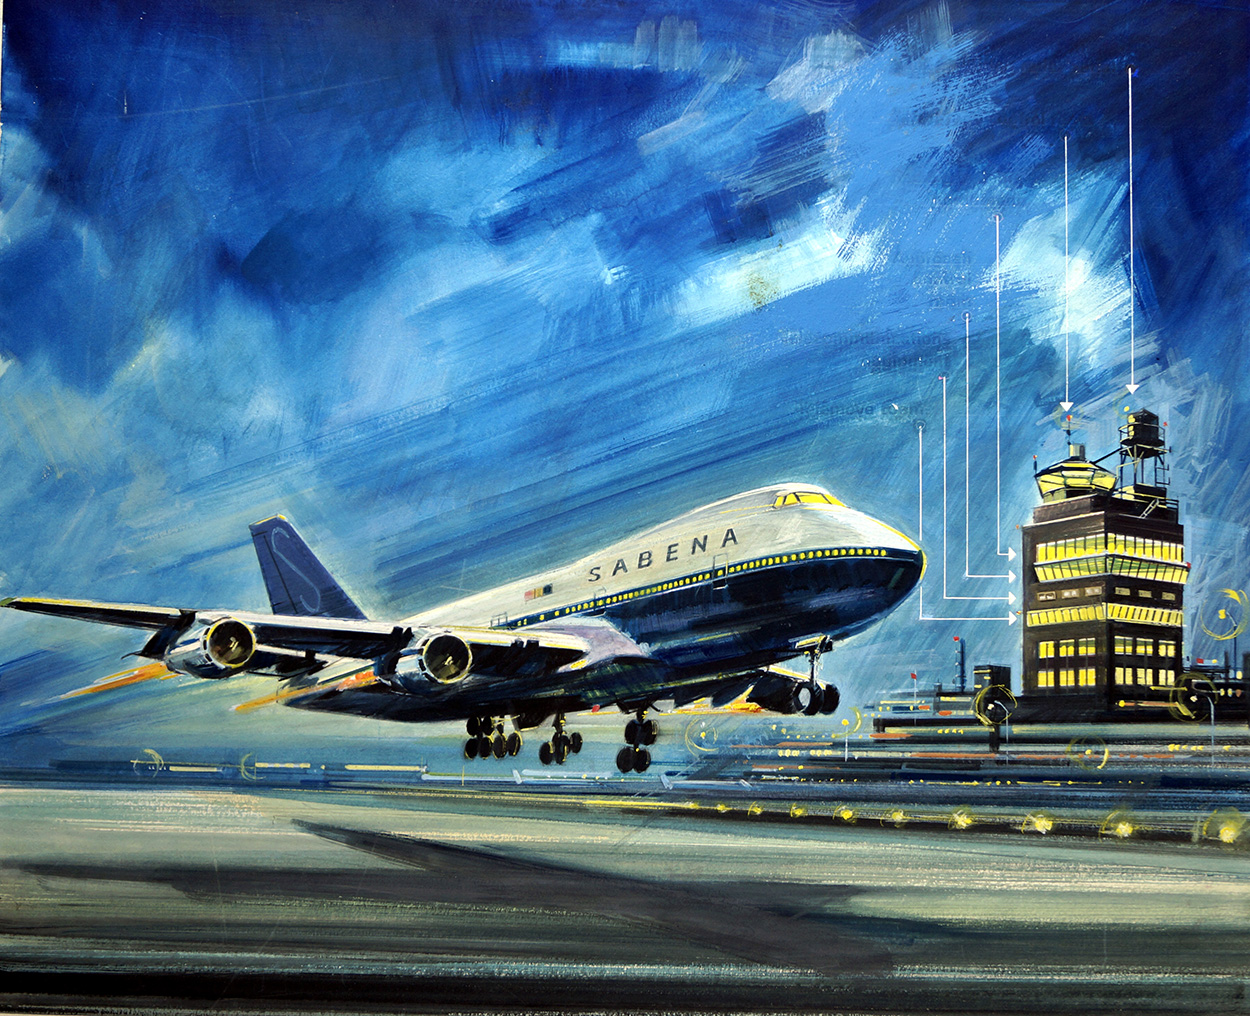 Air Traffic Control - Sabena (Original) art by Air (Wilf Hardy) at The Illustration Art Gallery